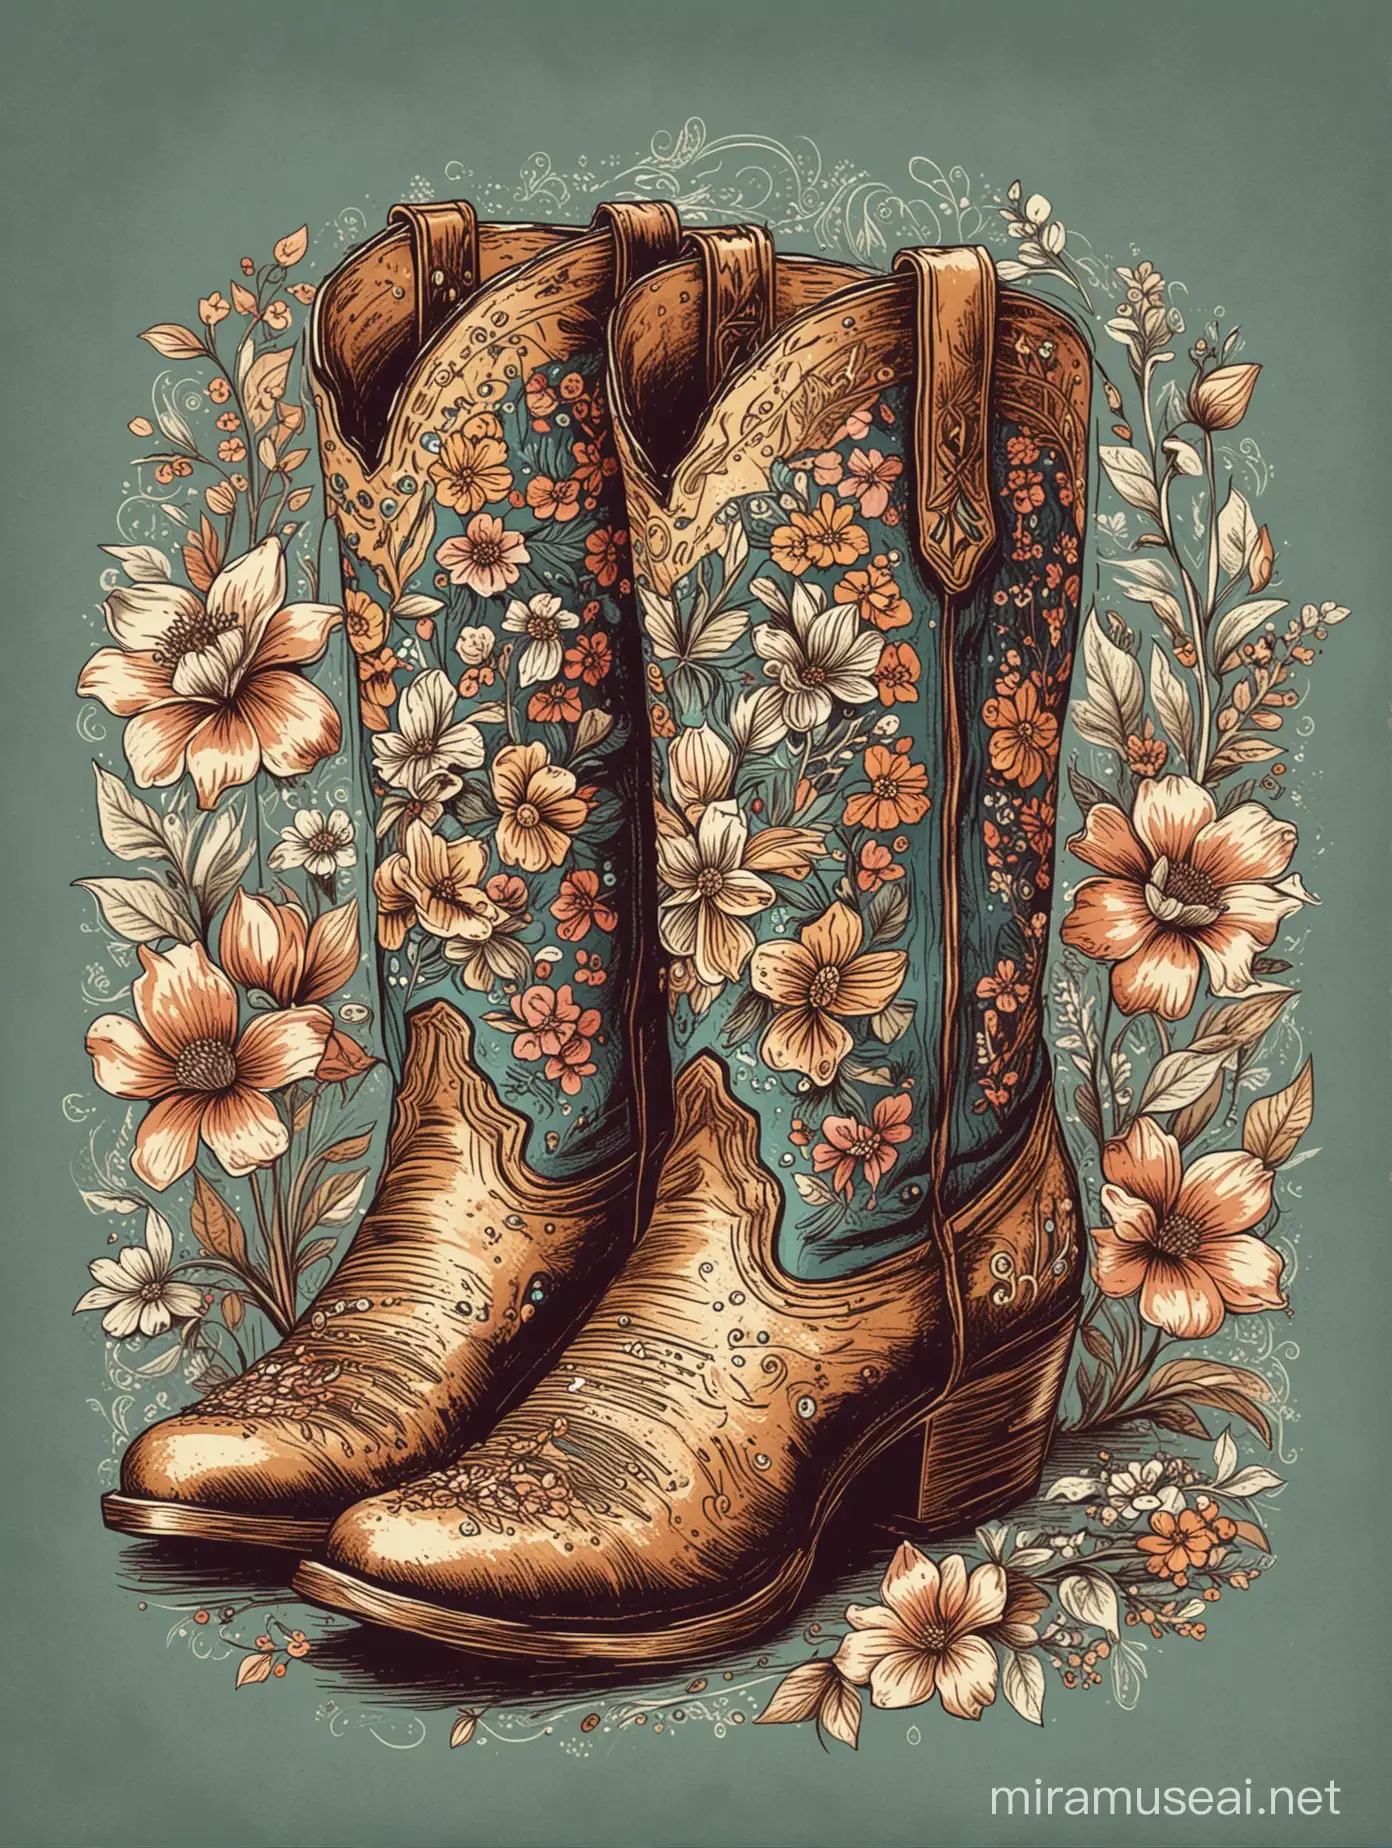 retro imperfect pen illustration of floral 
cowboy boots 